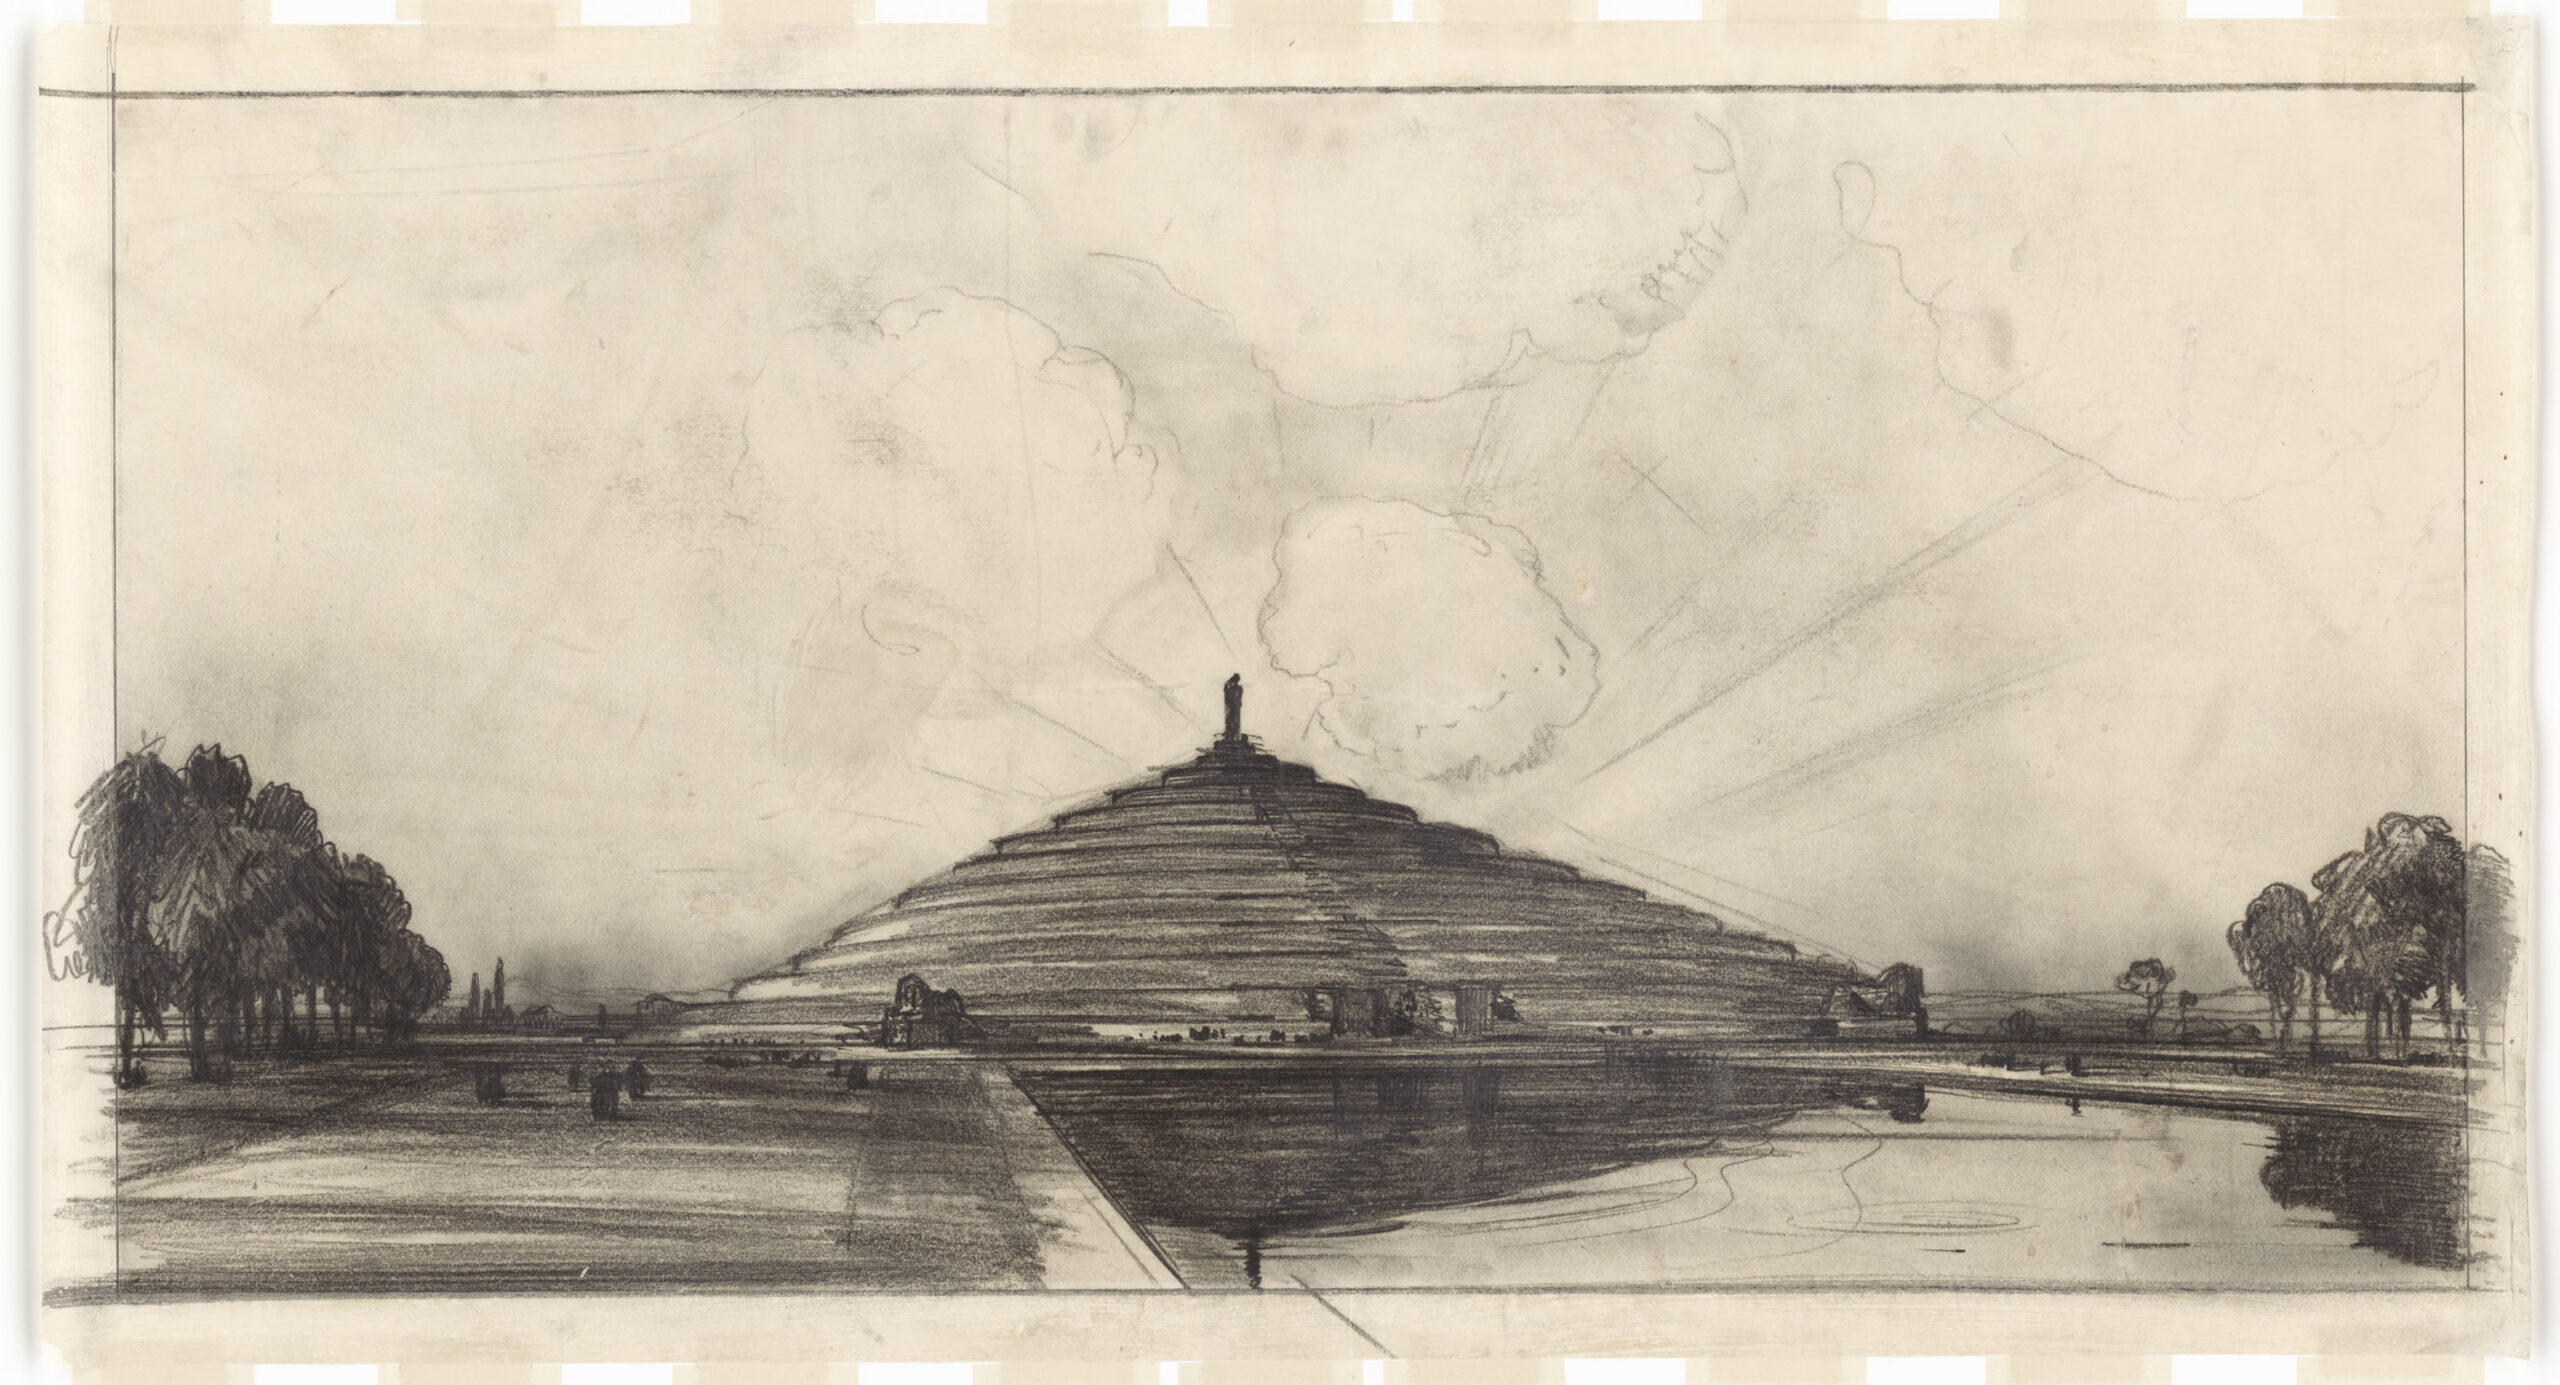 Circular Ziggurat Style Monument